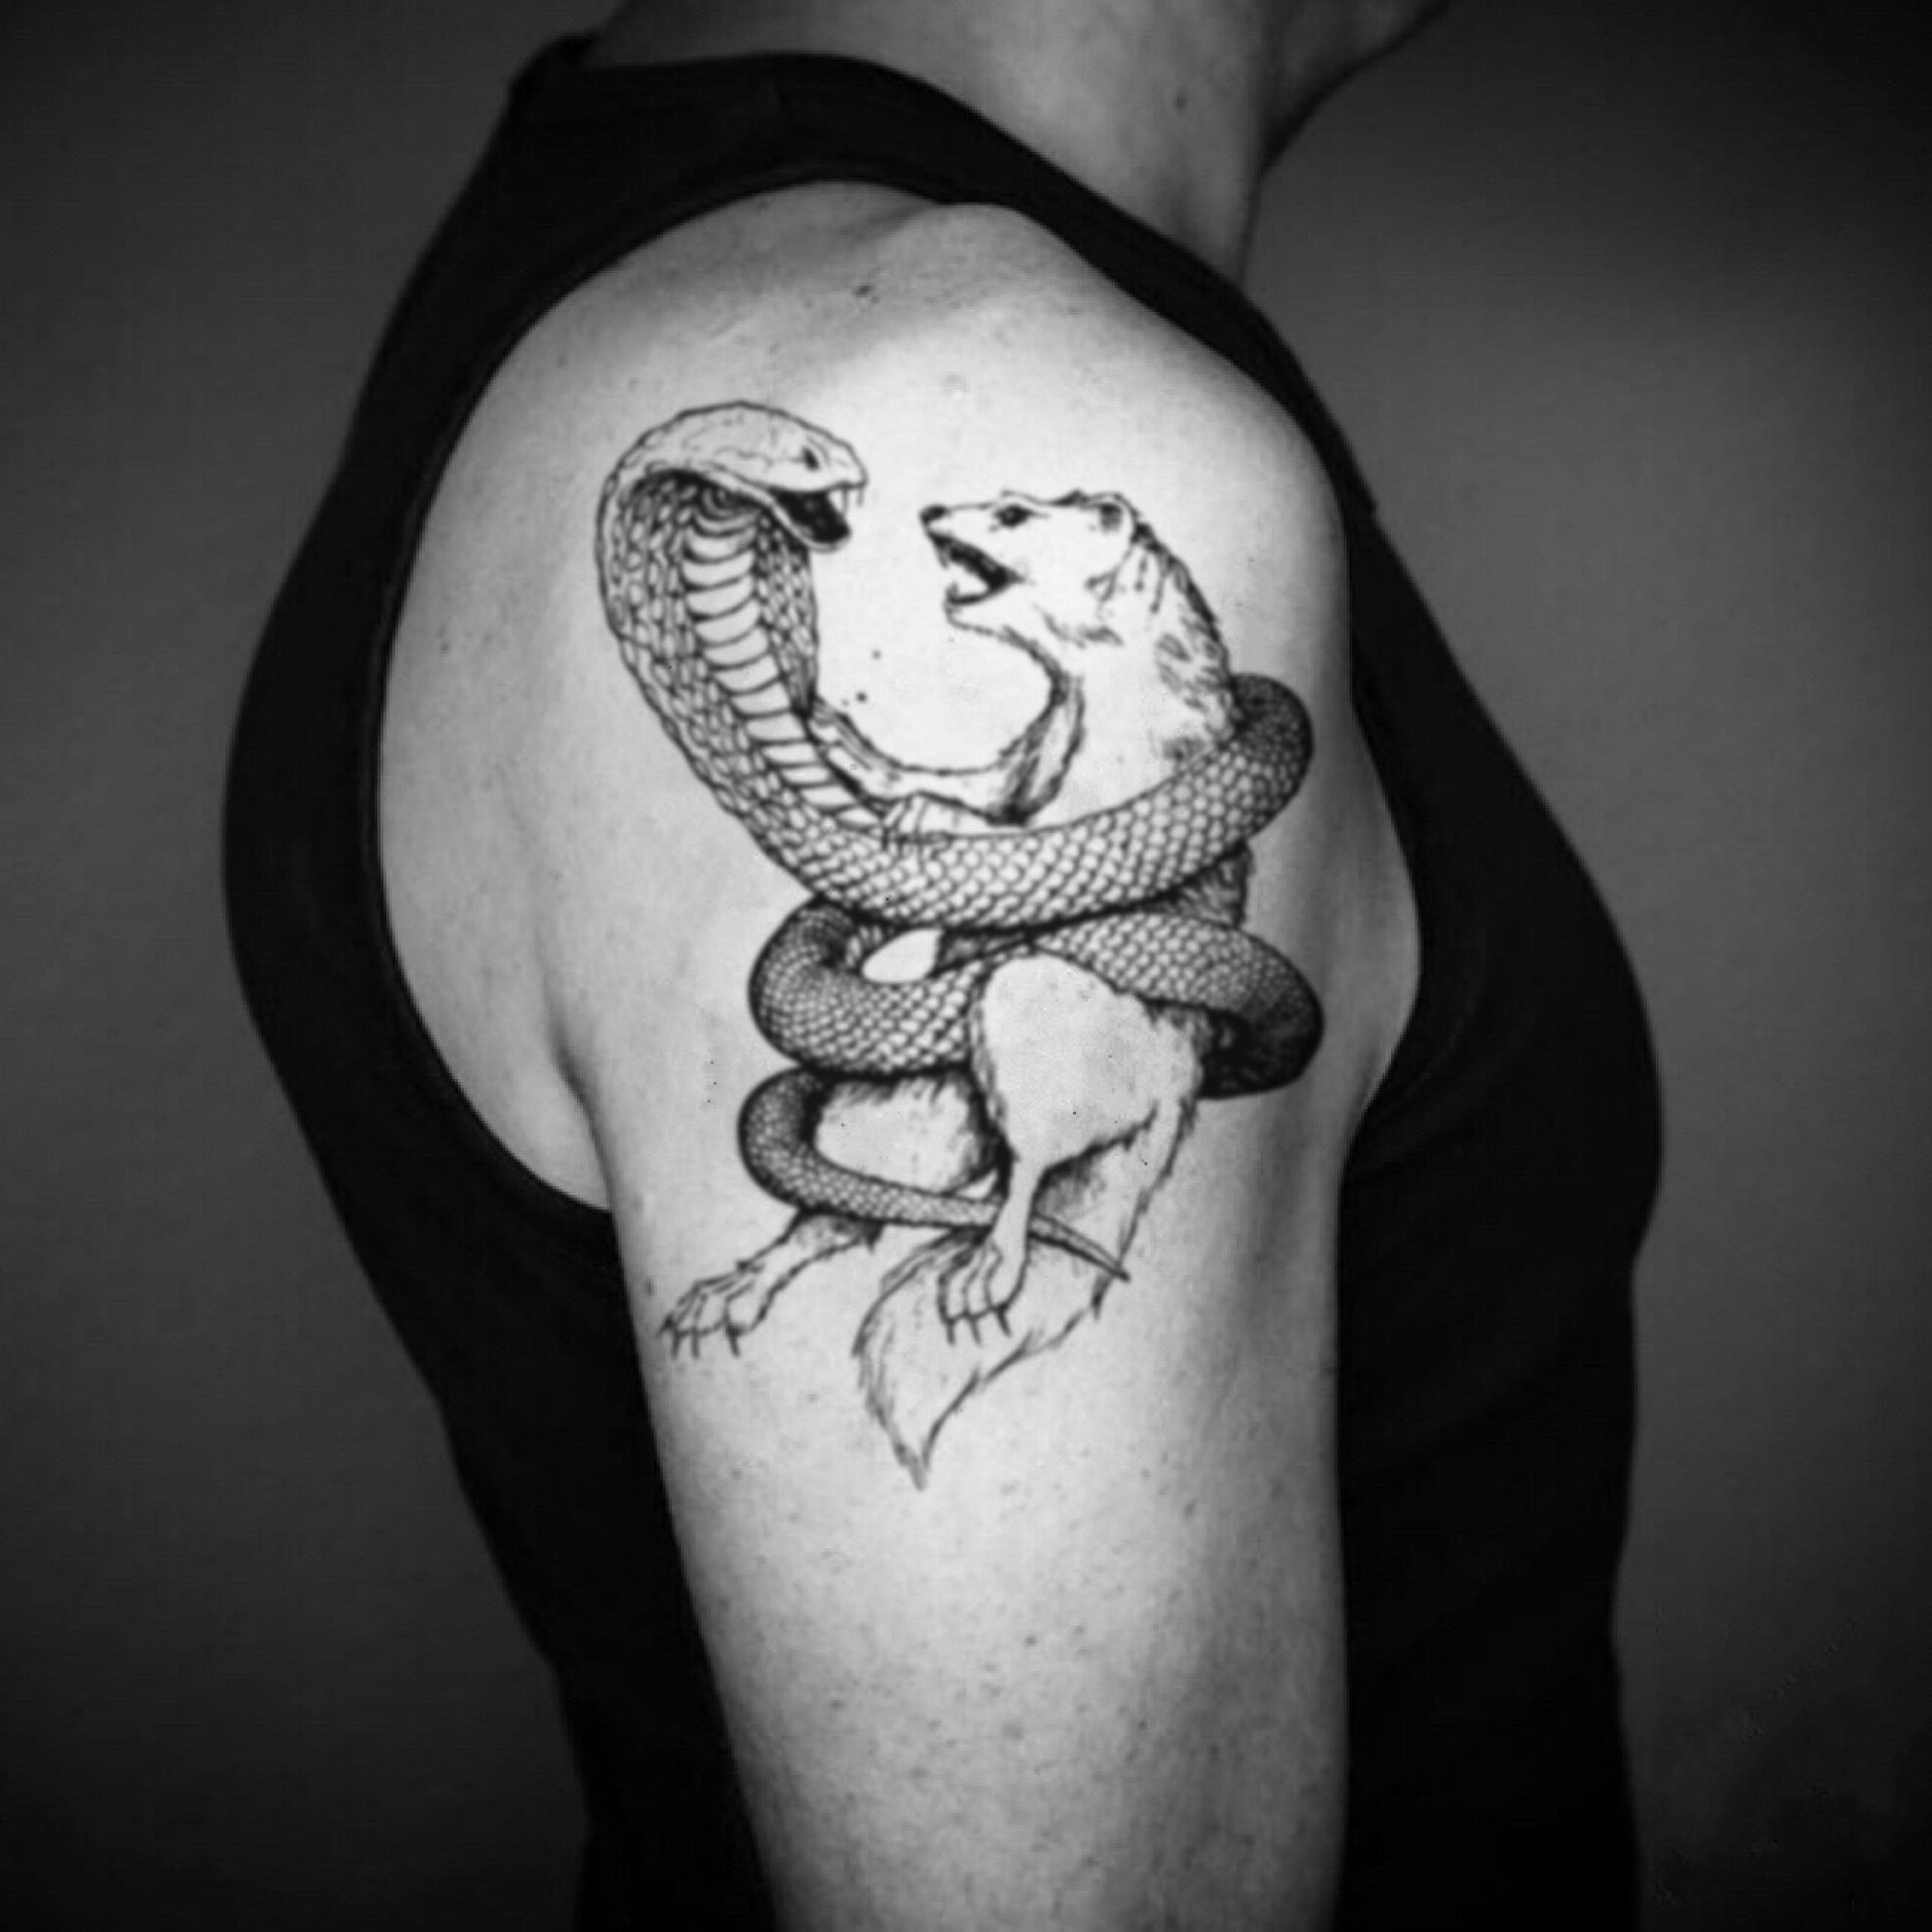 fake big mongoose animal temporary tattoo sticker design idea on upper arm